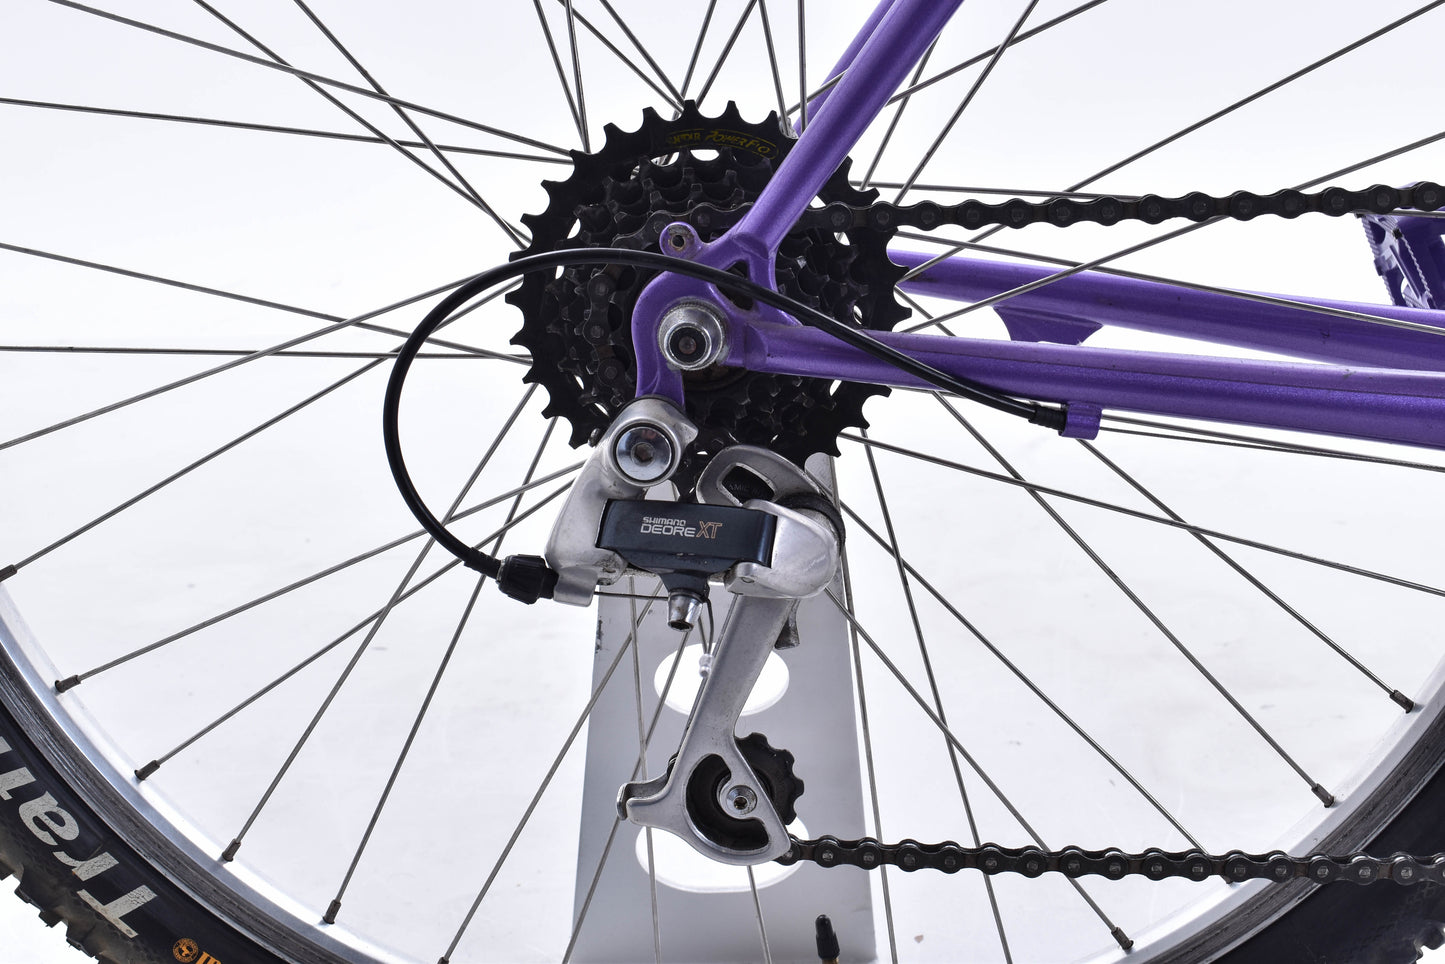 USED 1994 Santana Rio 22"/20" ATB Tandem Bike Purple Tange Chromoly Steel